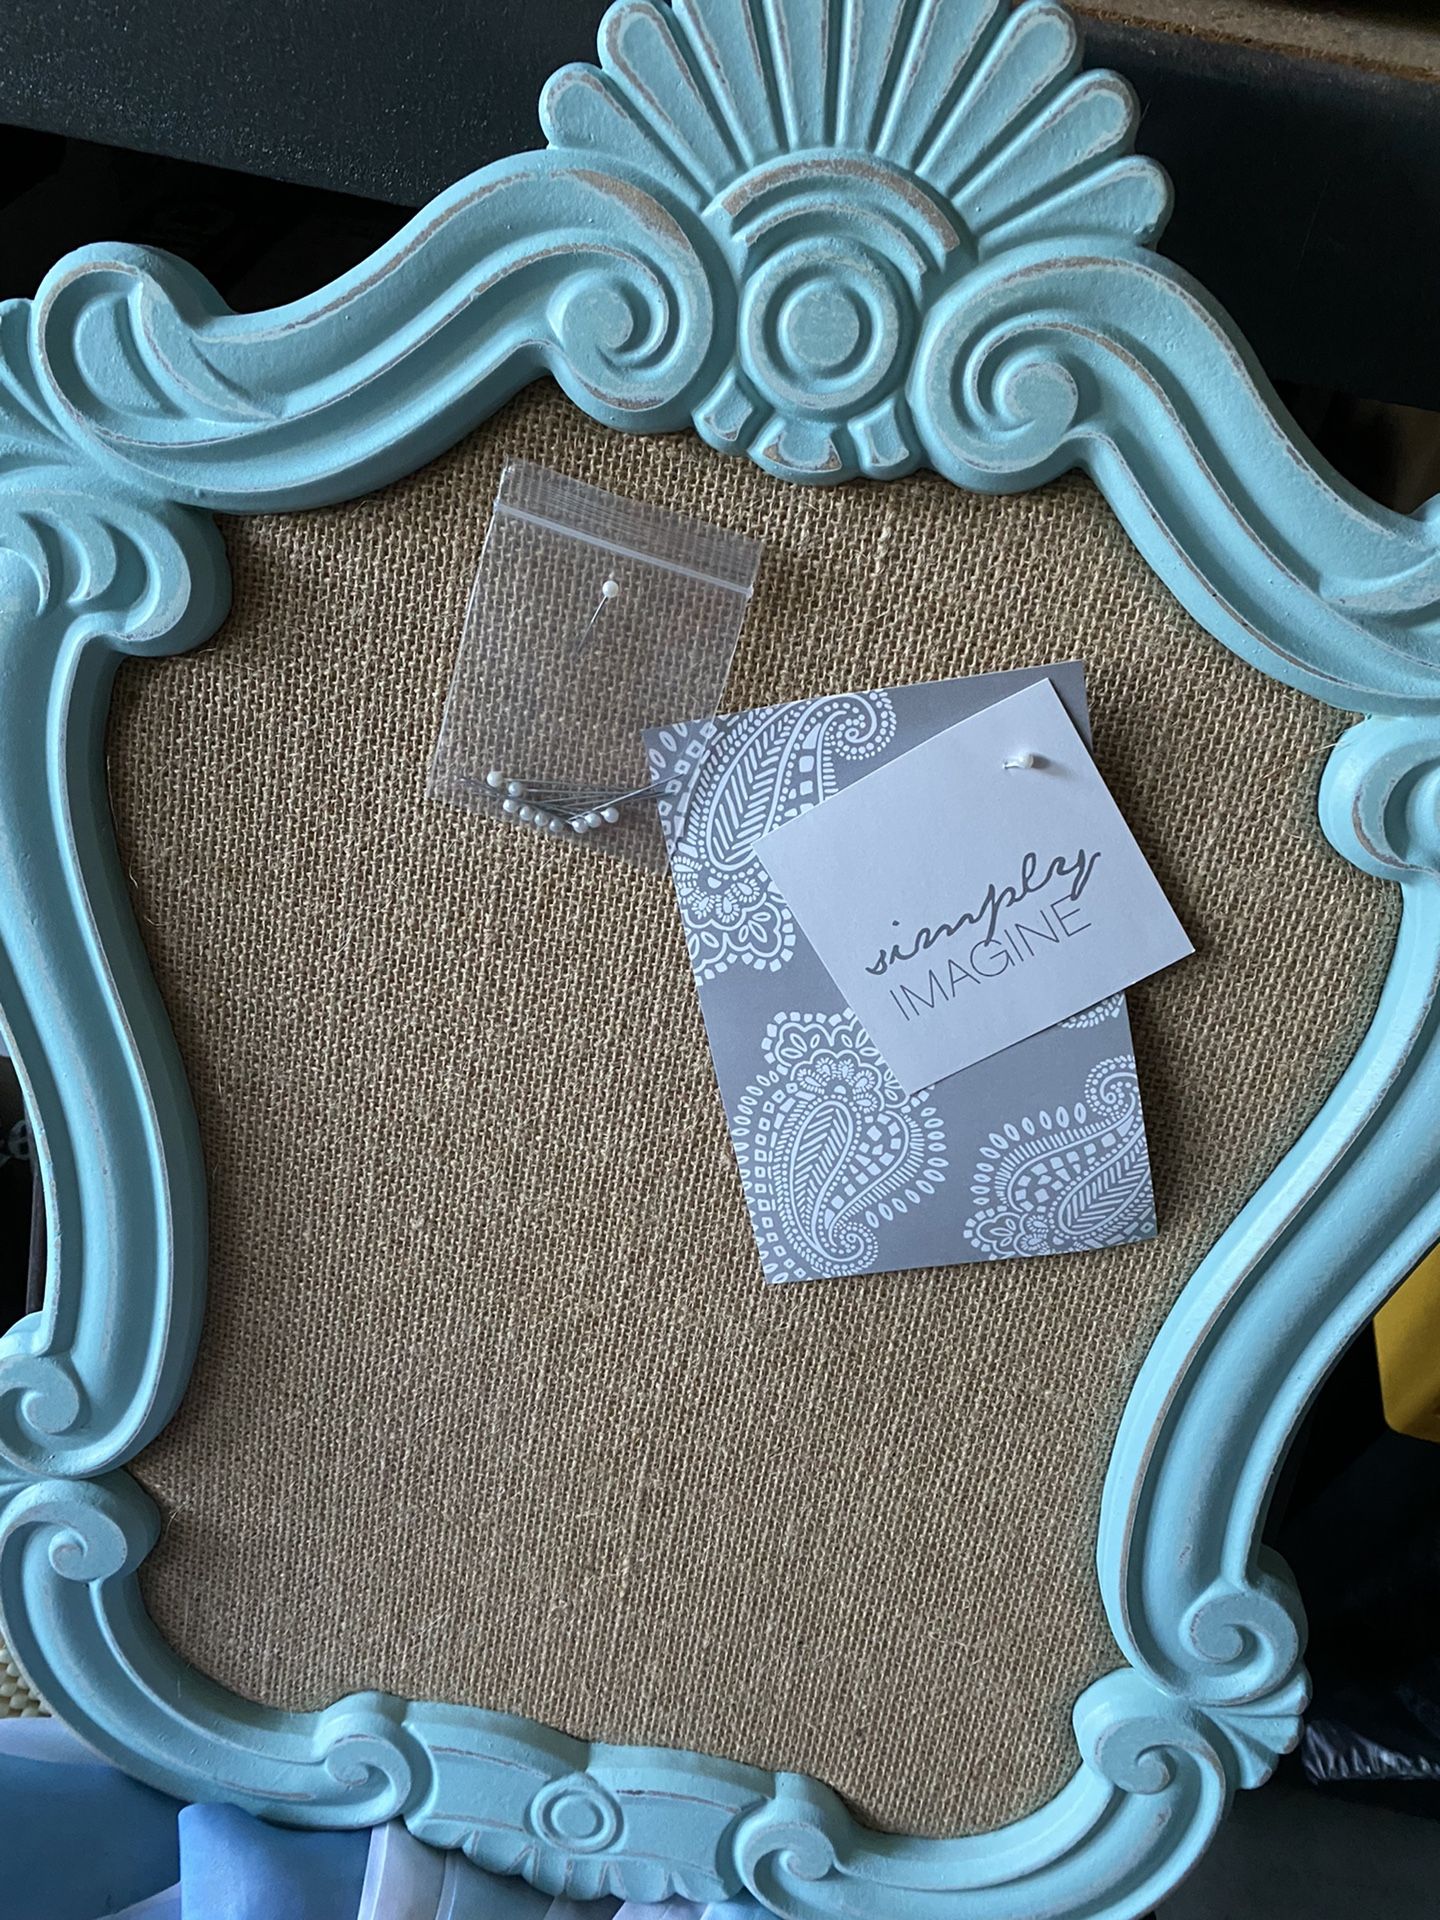 Small Turquoise Pin Board. So Cute! 